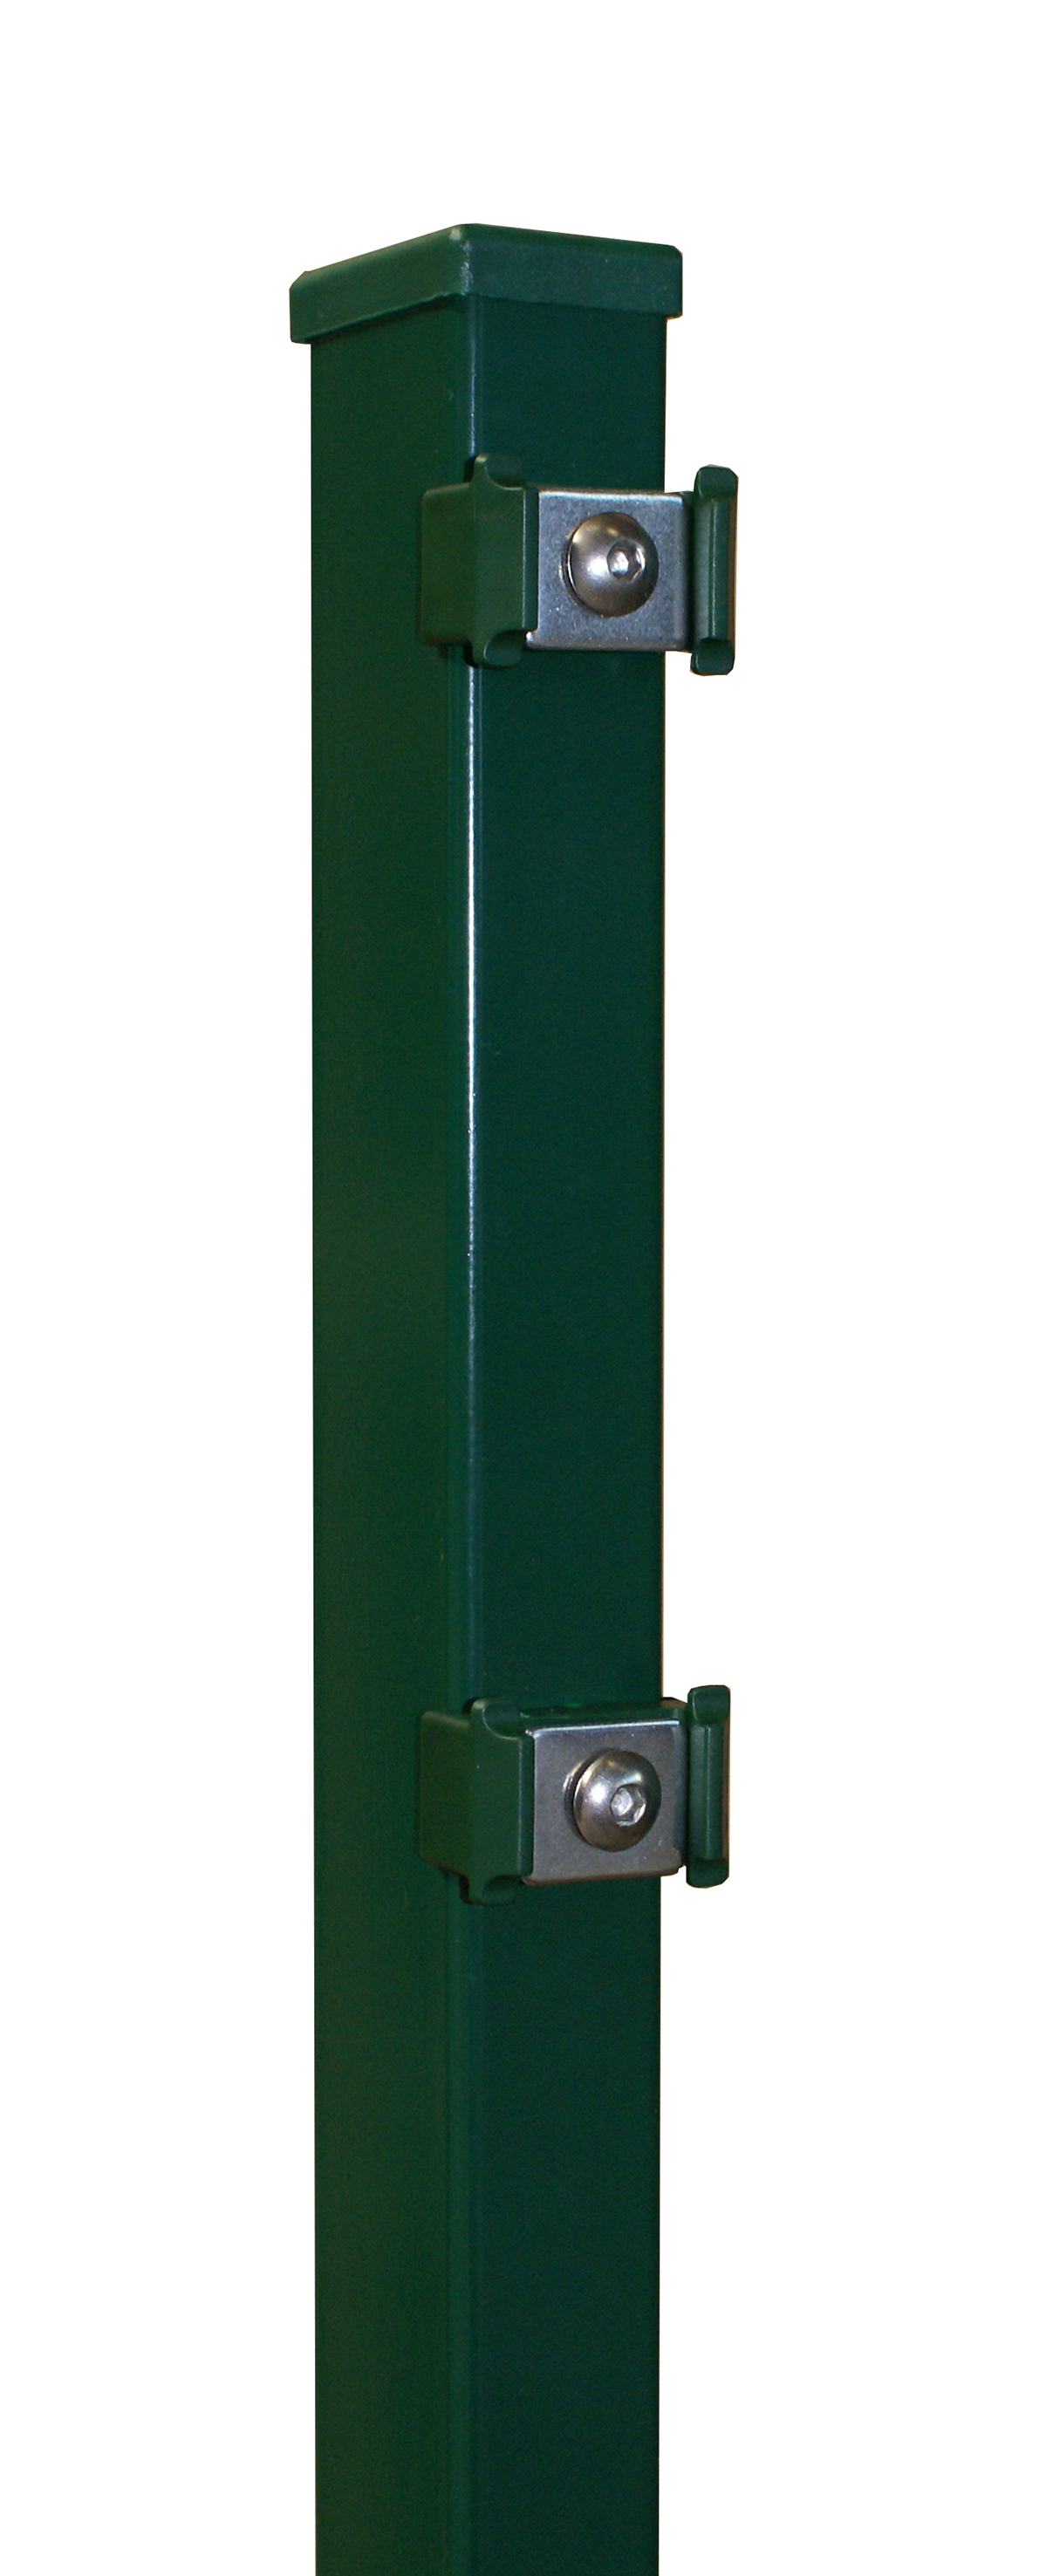 ZL OST Rechteckpfosten 60x40x2000 mm vz/grün mit Klemmhalter für DS Matte 1430 mm